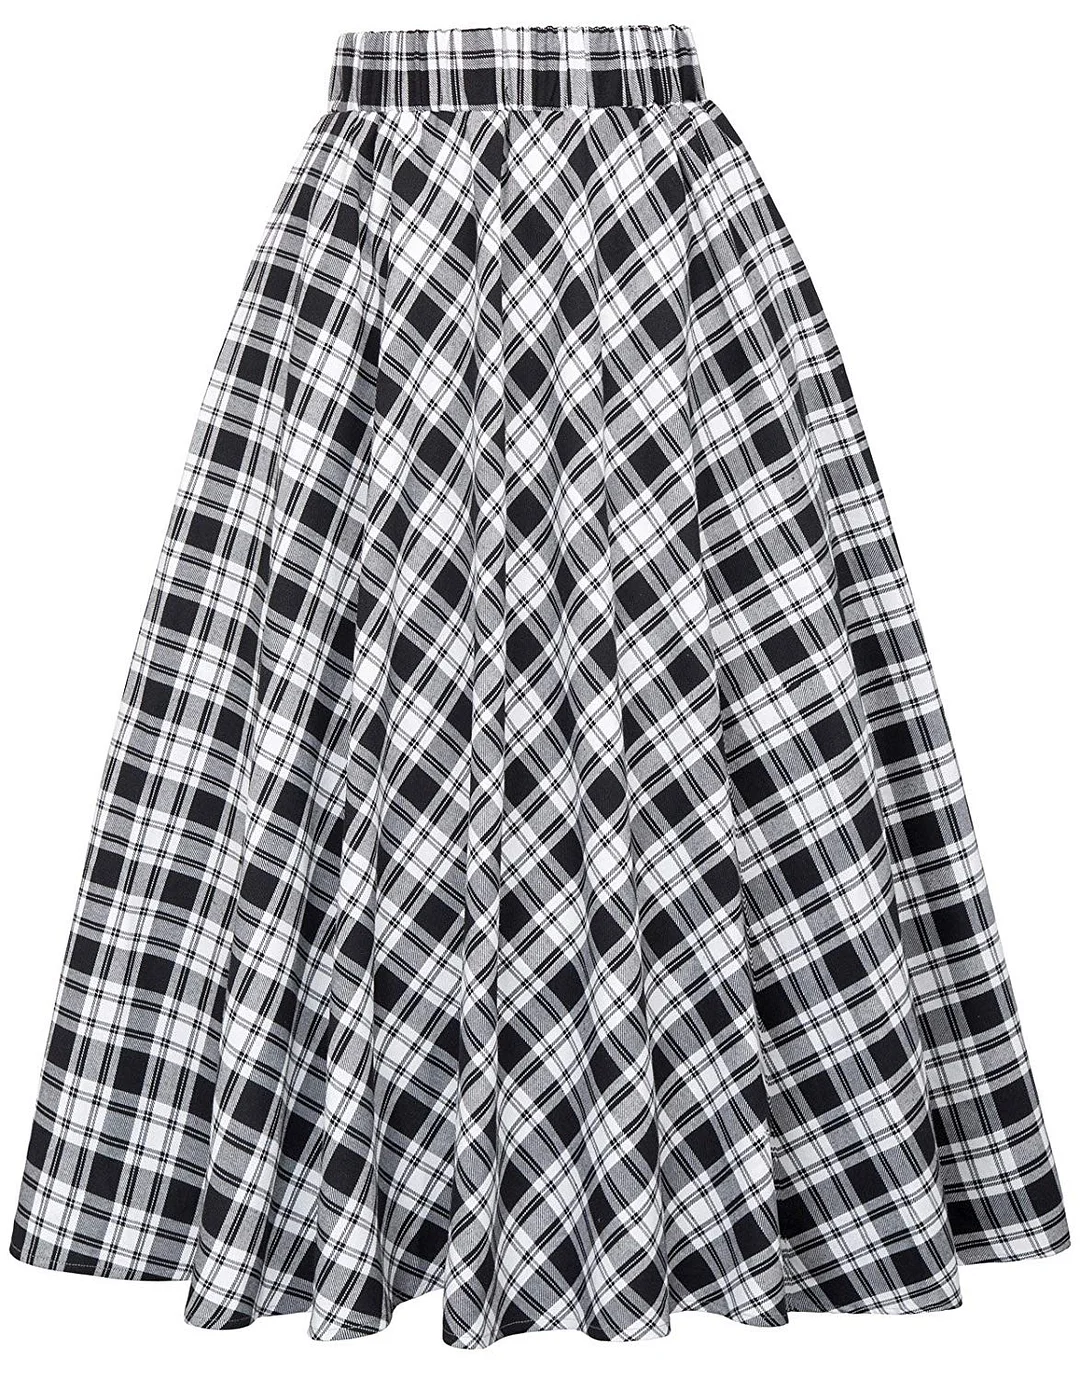 Women's A-Line Vintage Skirt Grid Pattern Plaid KK633/ KK495